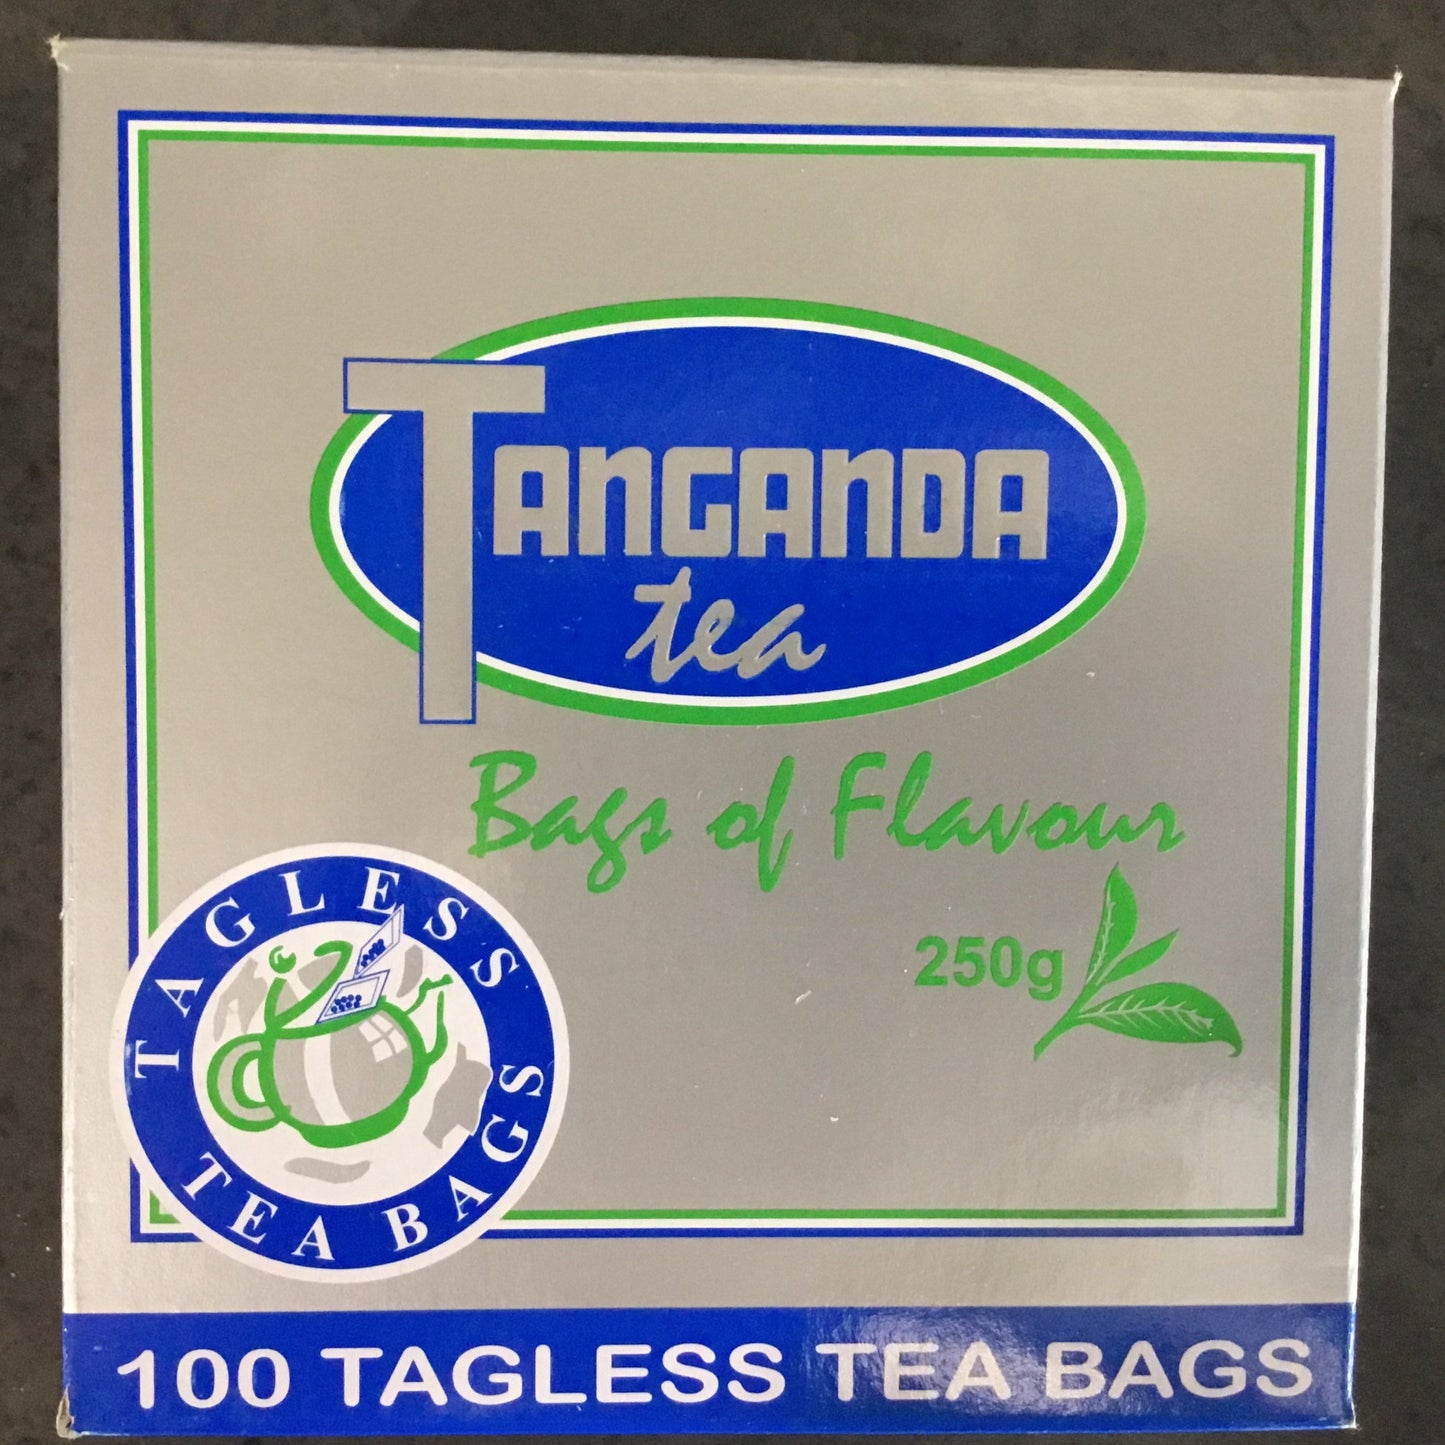 Tanganda Tea 100 250g